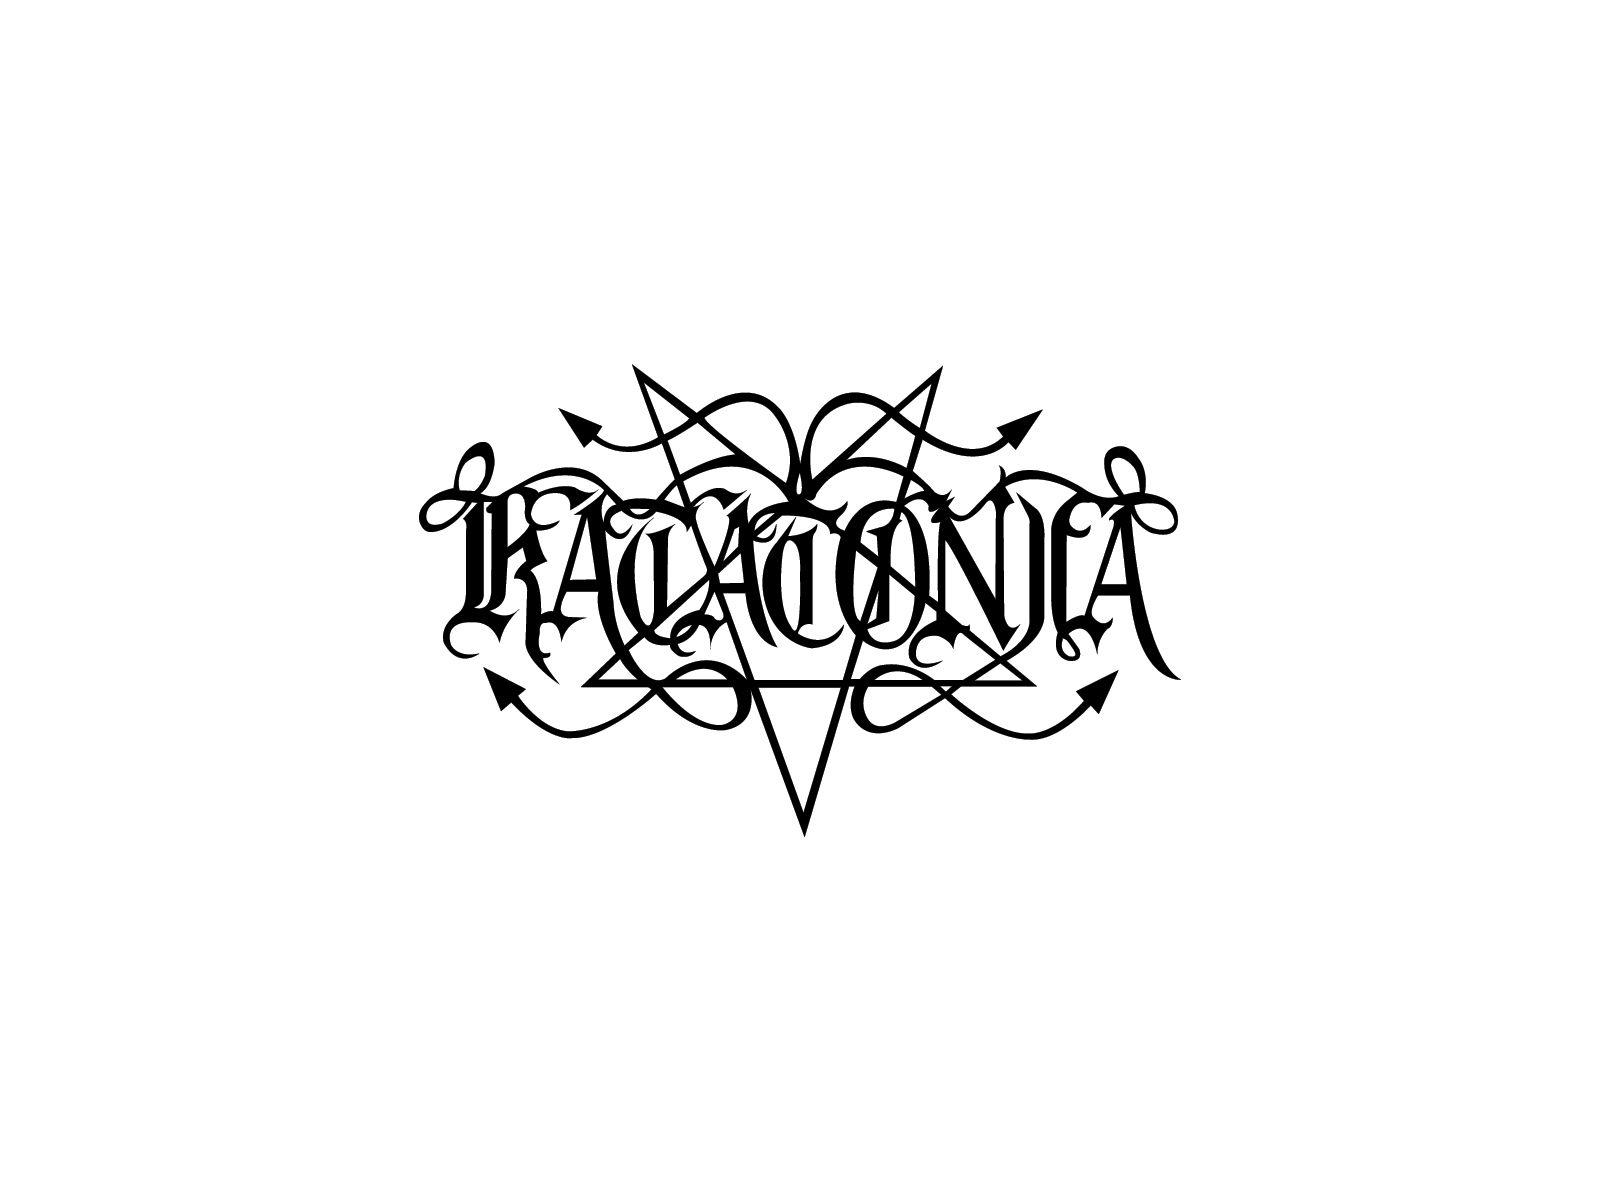 Katatonia logo and wallpaper. Band logos band logos, metal